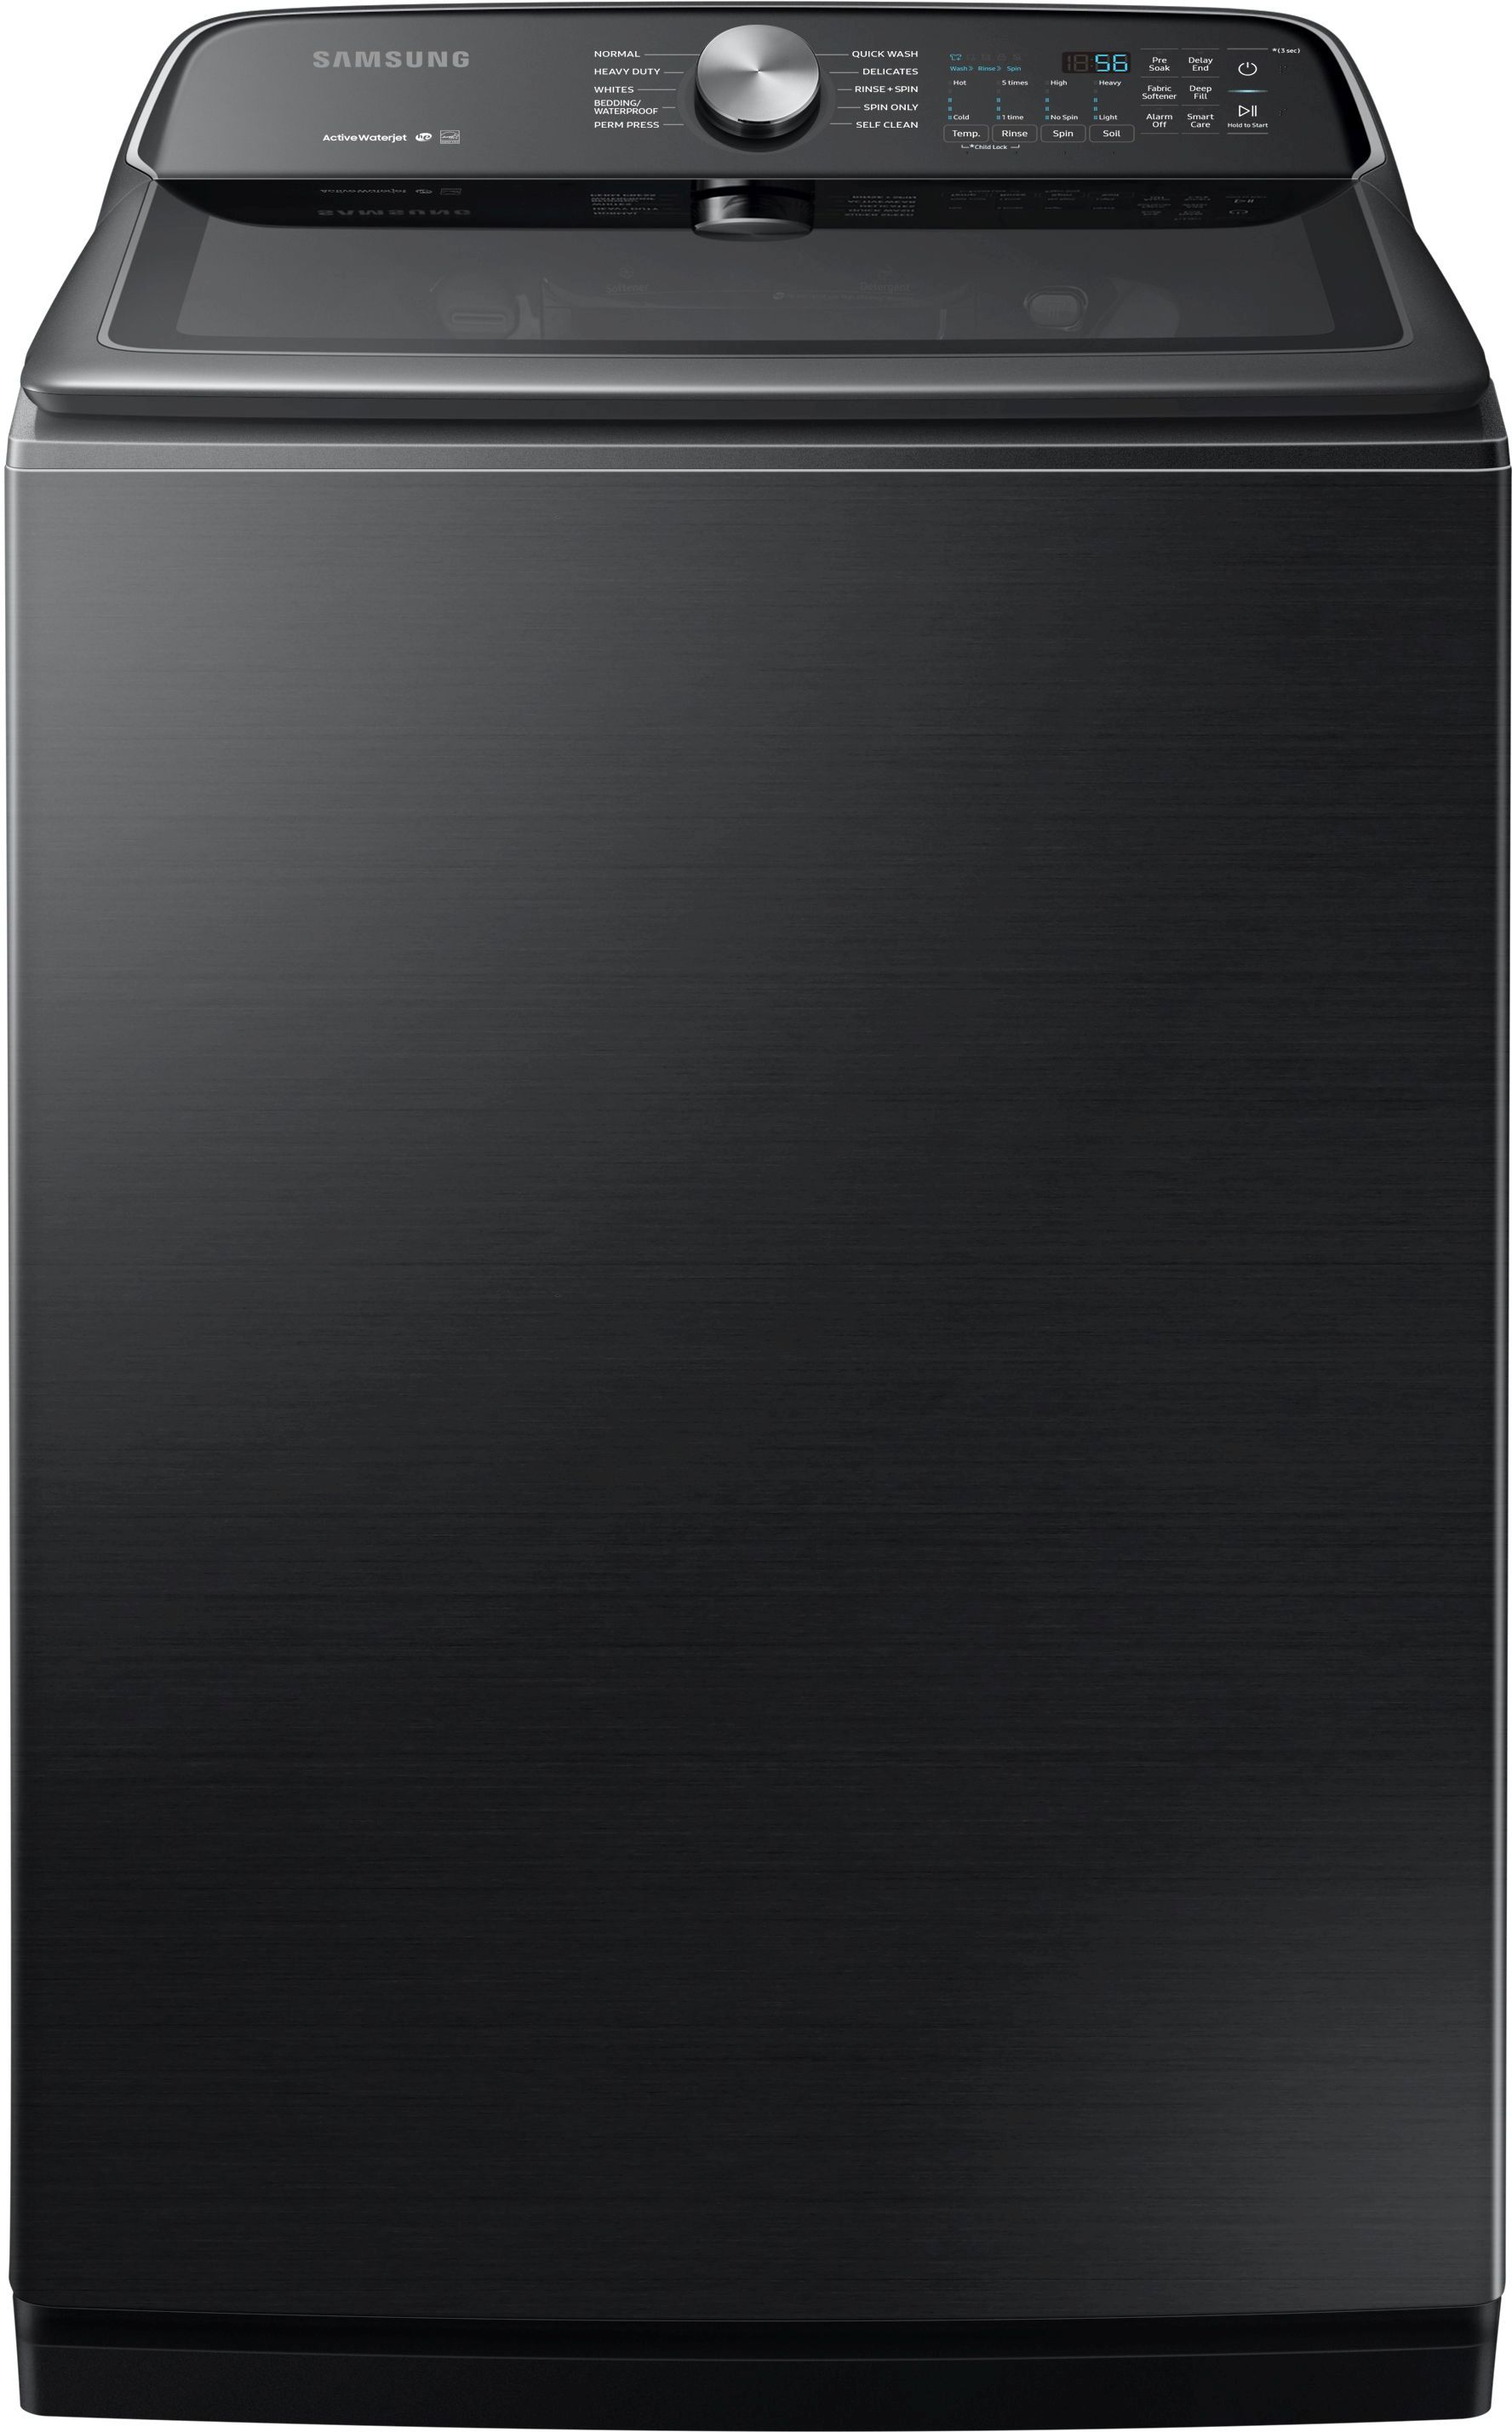 Samsung 5.4 Cu. Ft. Fingerprint Resistant Black Stainless Steel Top Load Washer-WA54R7200AV